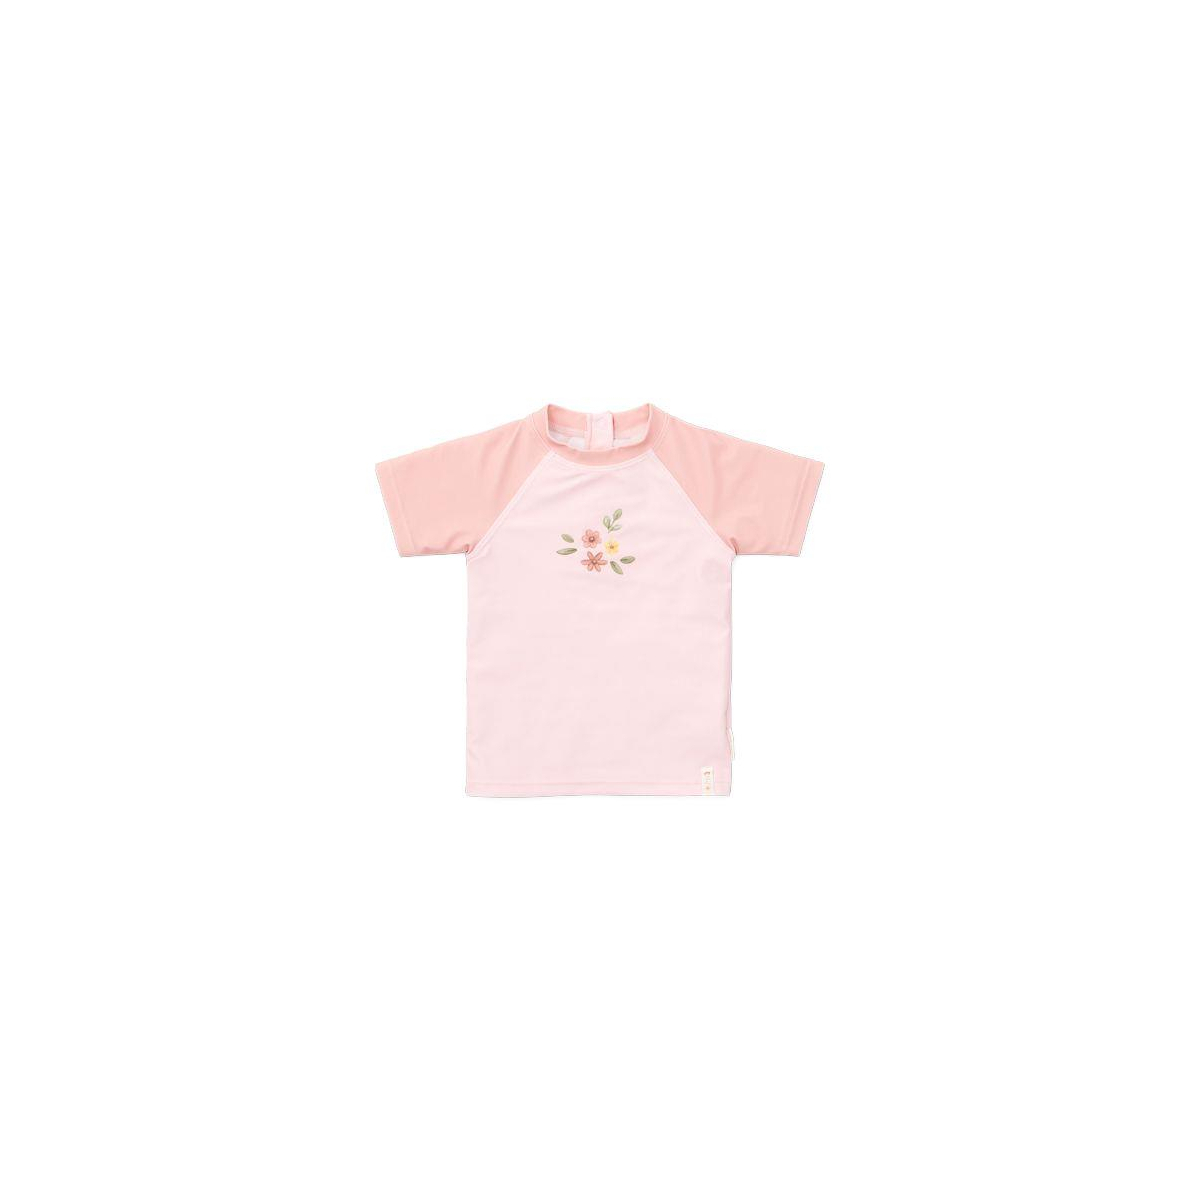 Shirt UV 50+ Manica Corta - Flower Pink